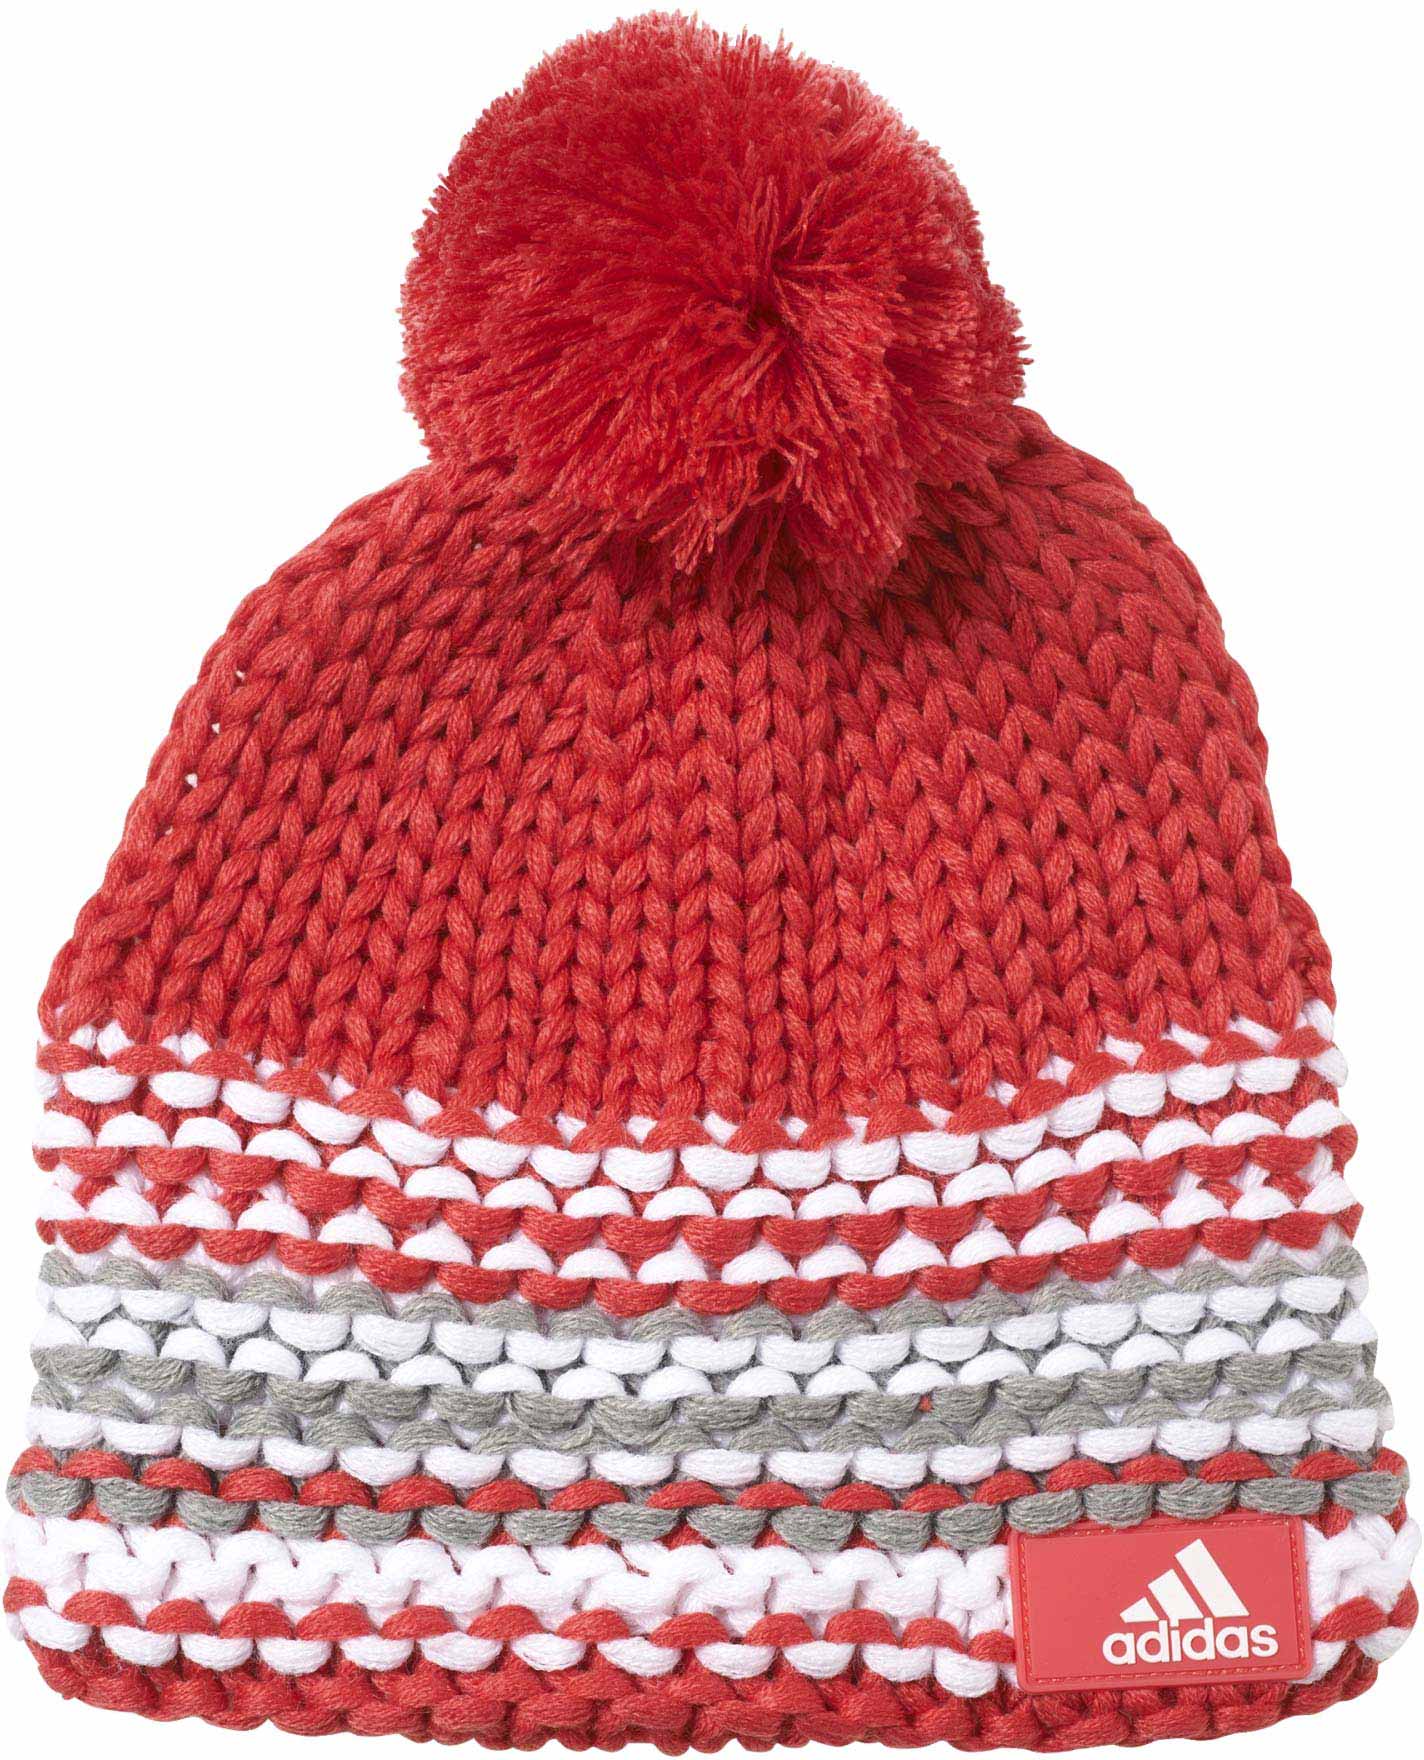 Girls’ winter hat